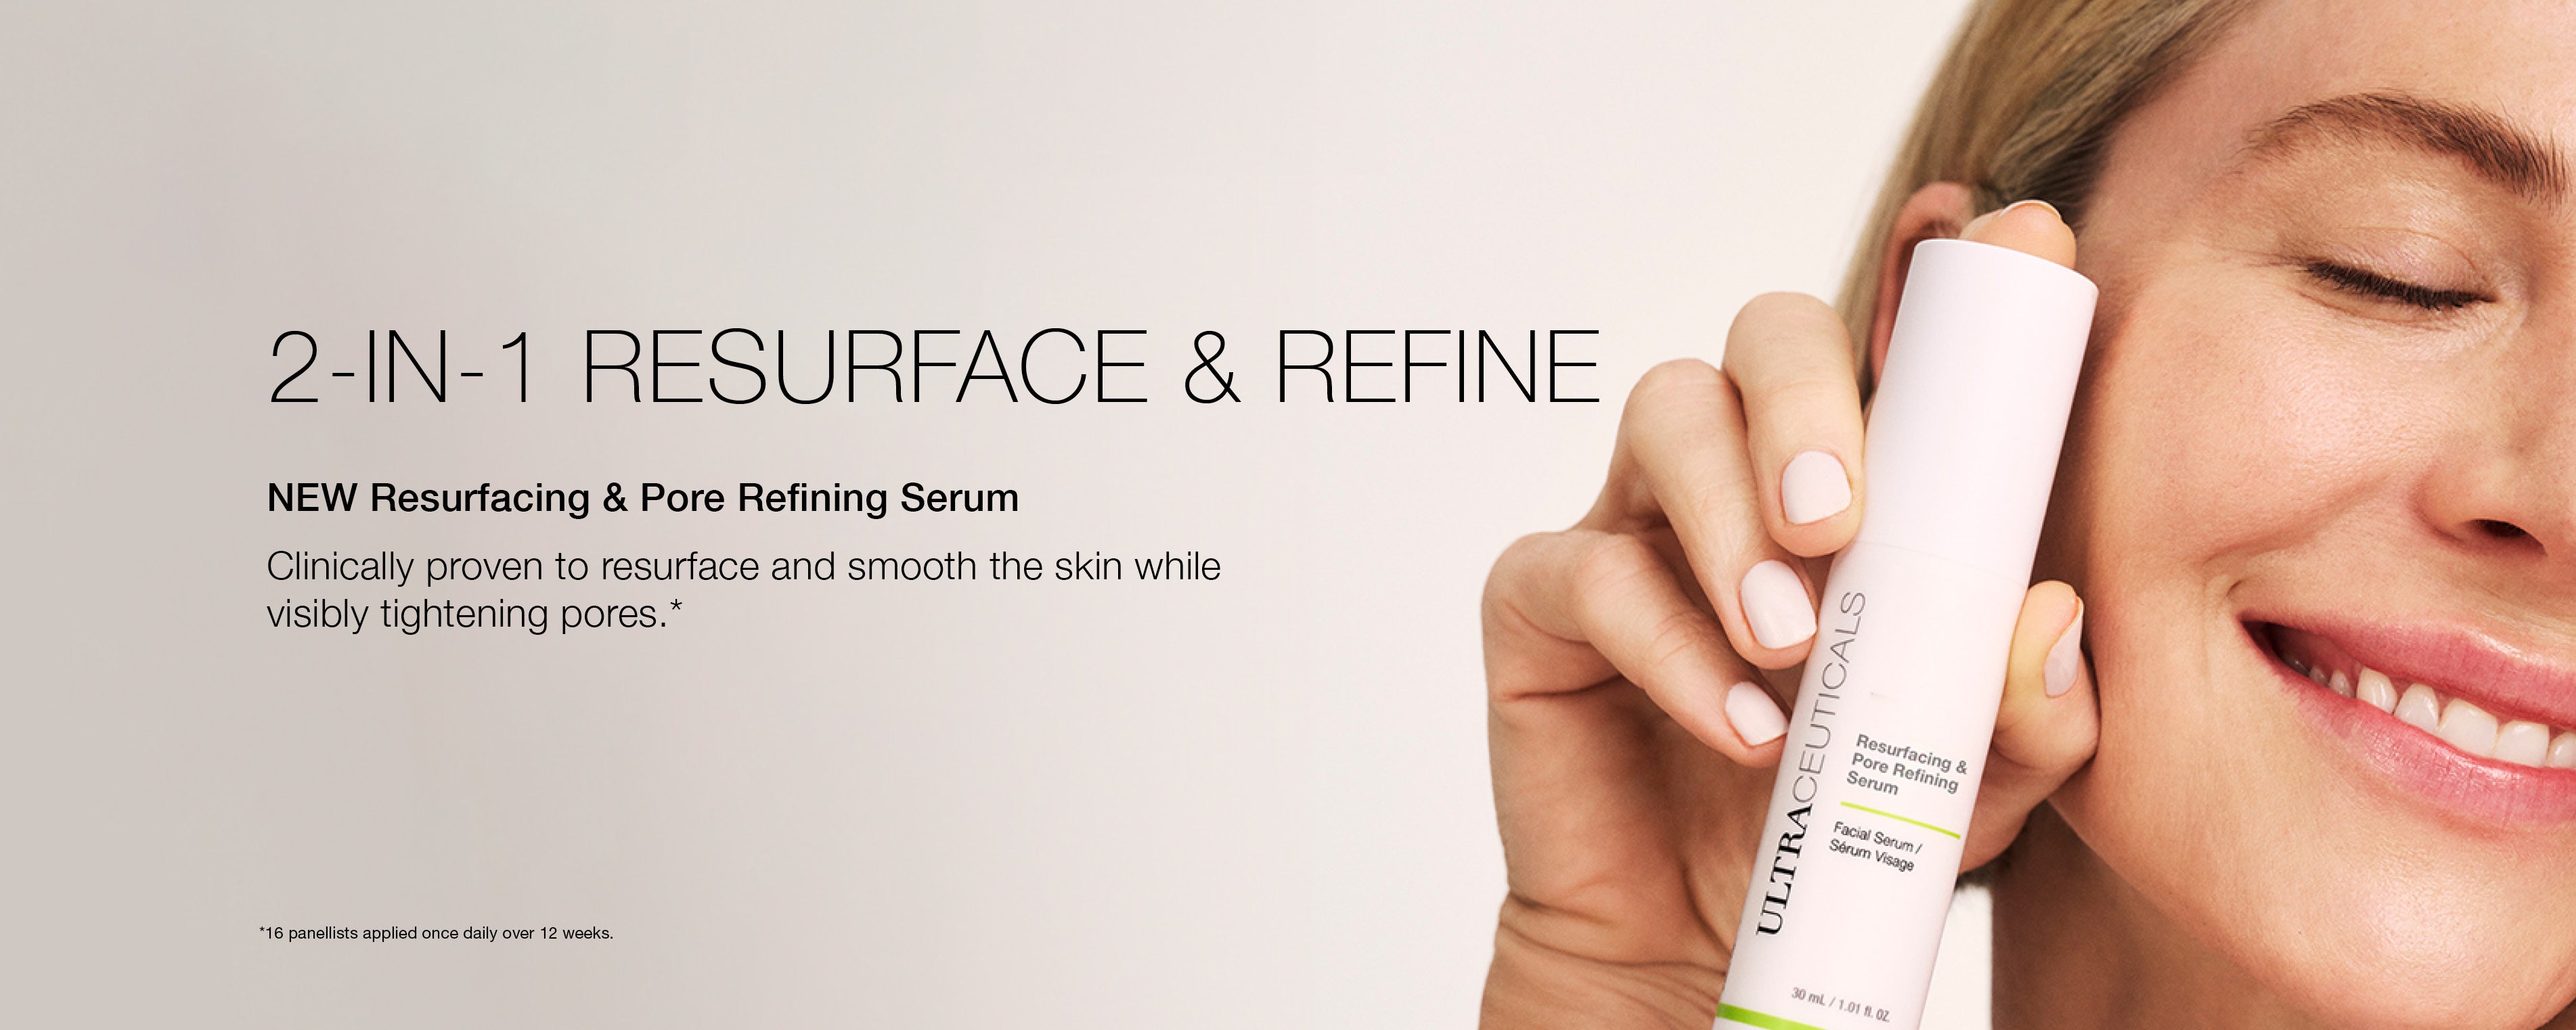 NEW Resurfacing and Pore Refining Serum